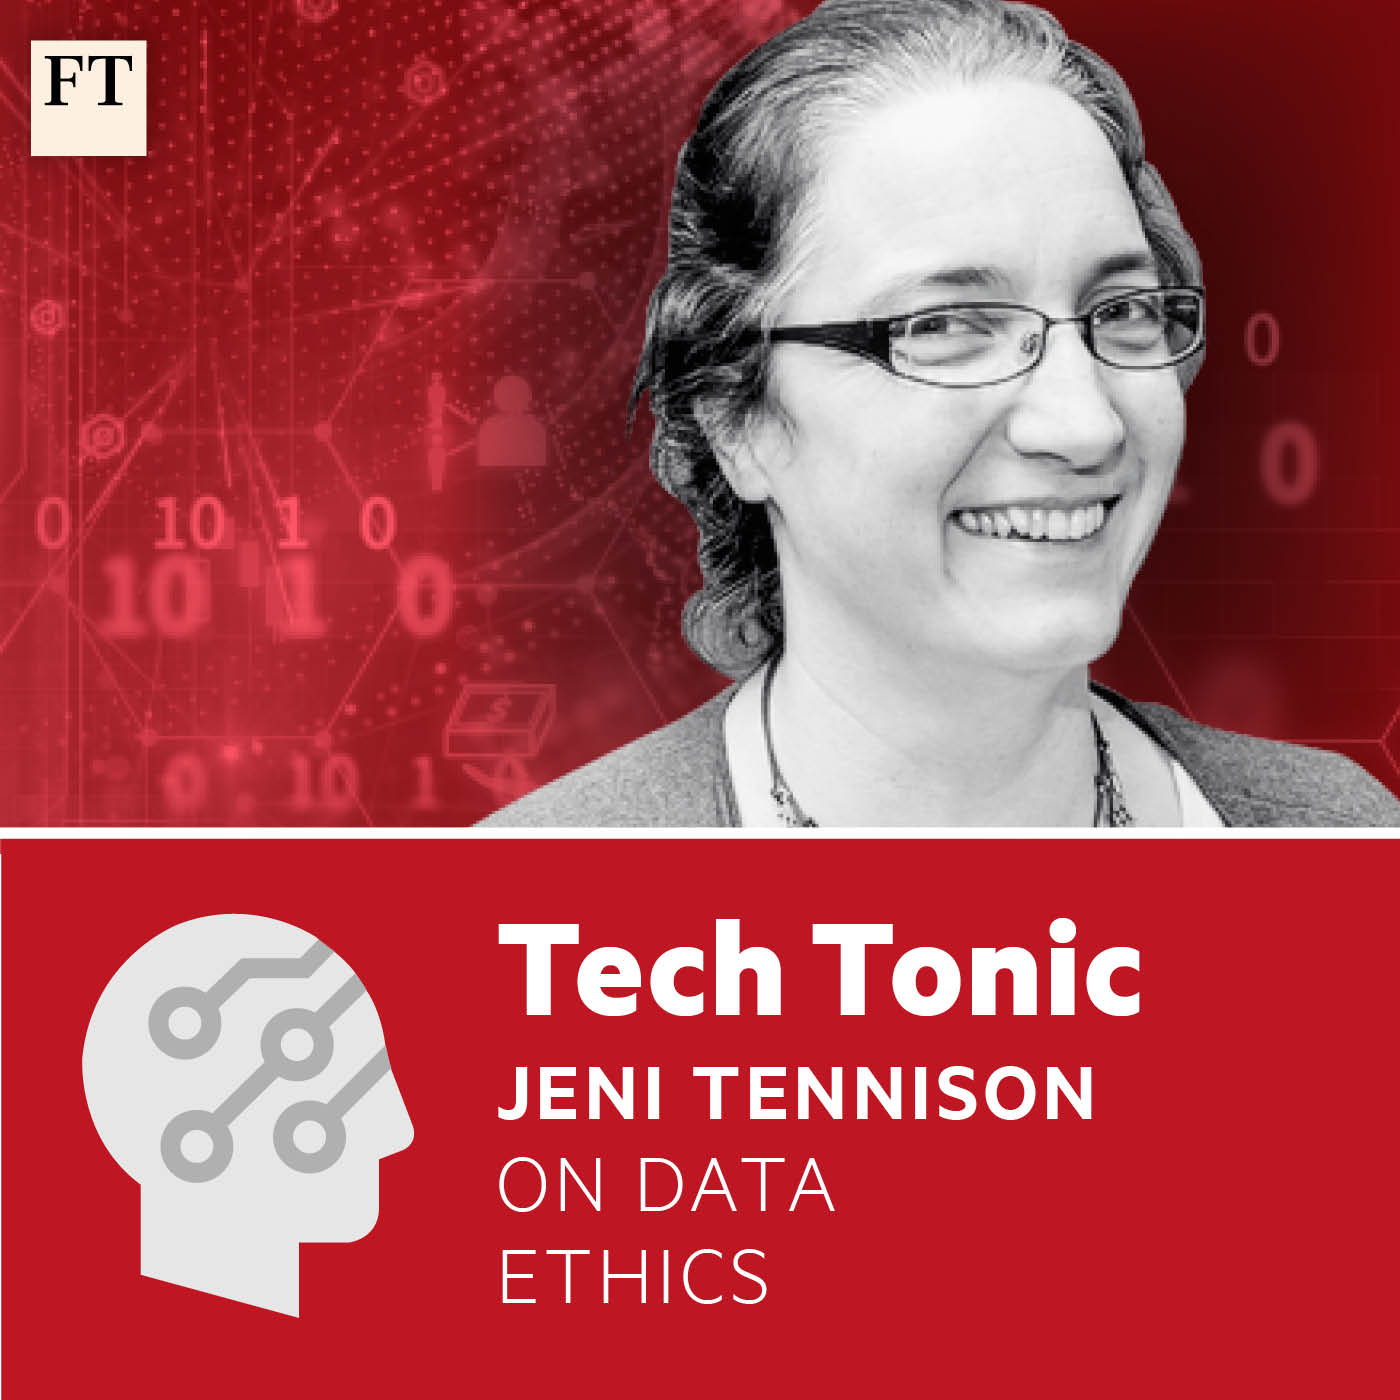 Jeni Tennison on data ethics